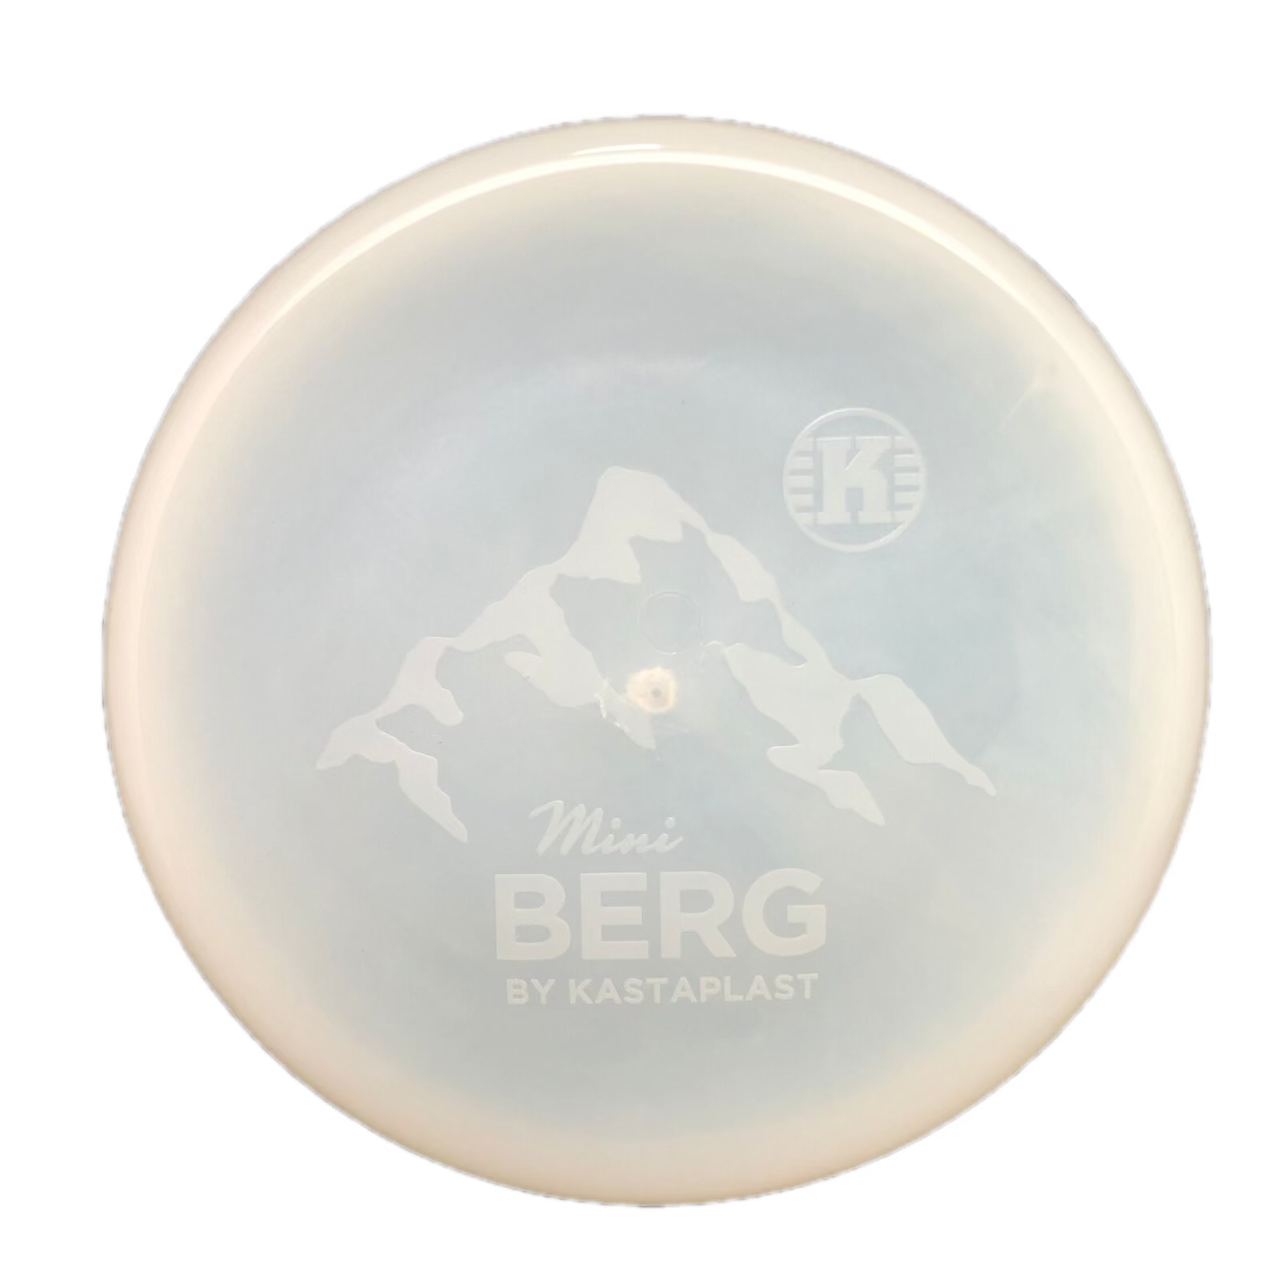 Kastaplast Mini Glow Berg - Astro Discs TX - Houston Disc Golf